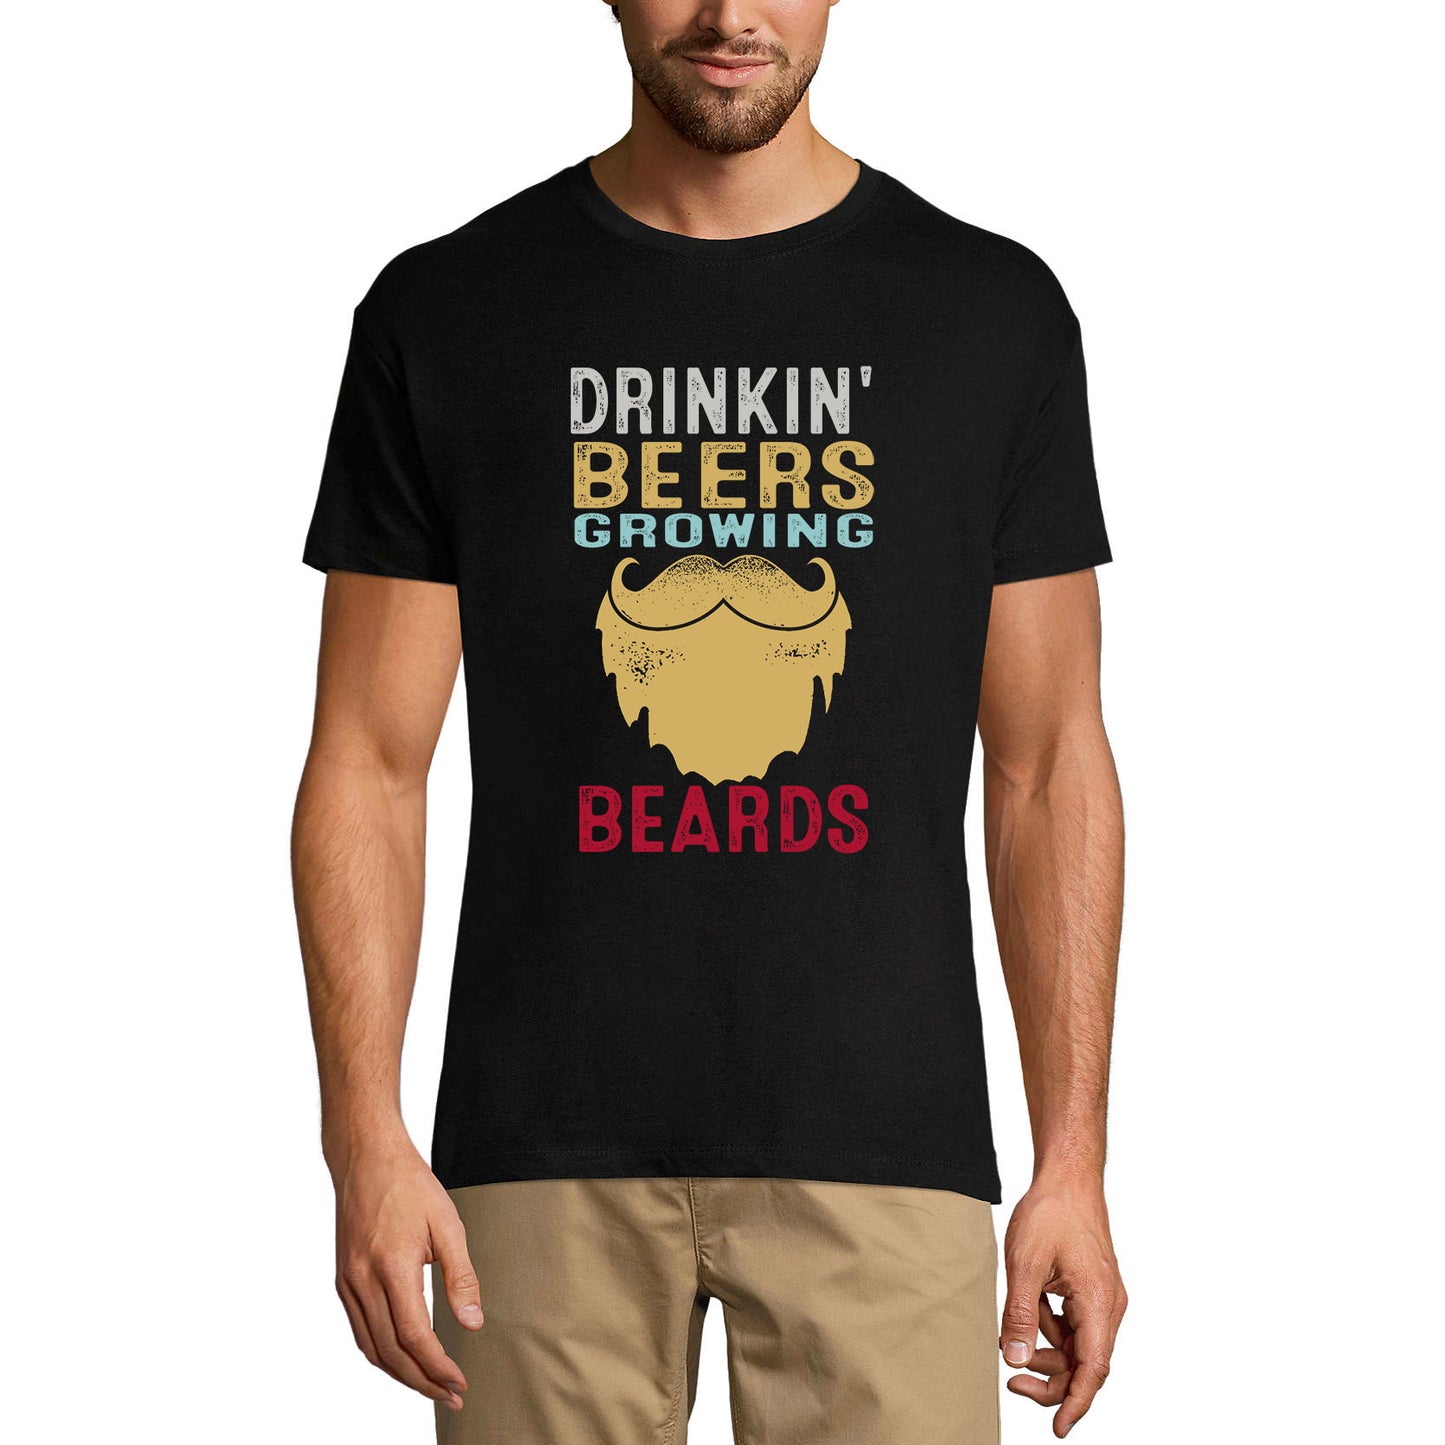 ULTRABASIC Herren-Neuheits-T-Shirt Drinkin' Beers Growing Beards – Lustiges Bierliebhaber-T-Shirt